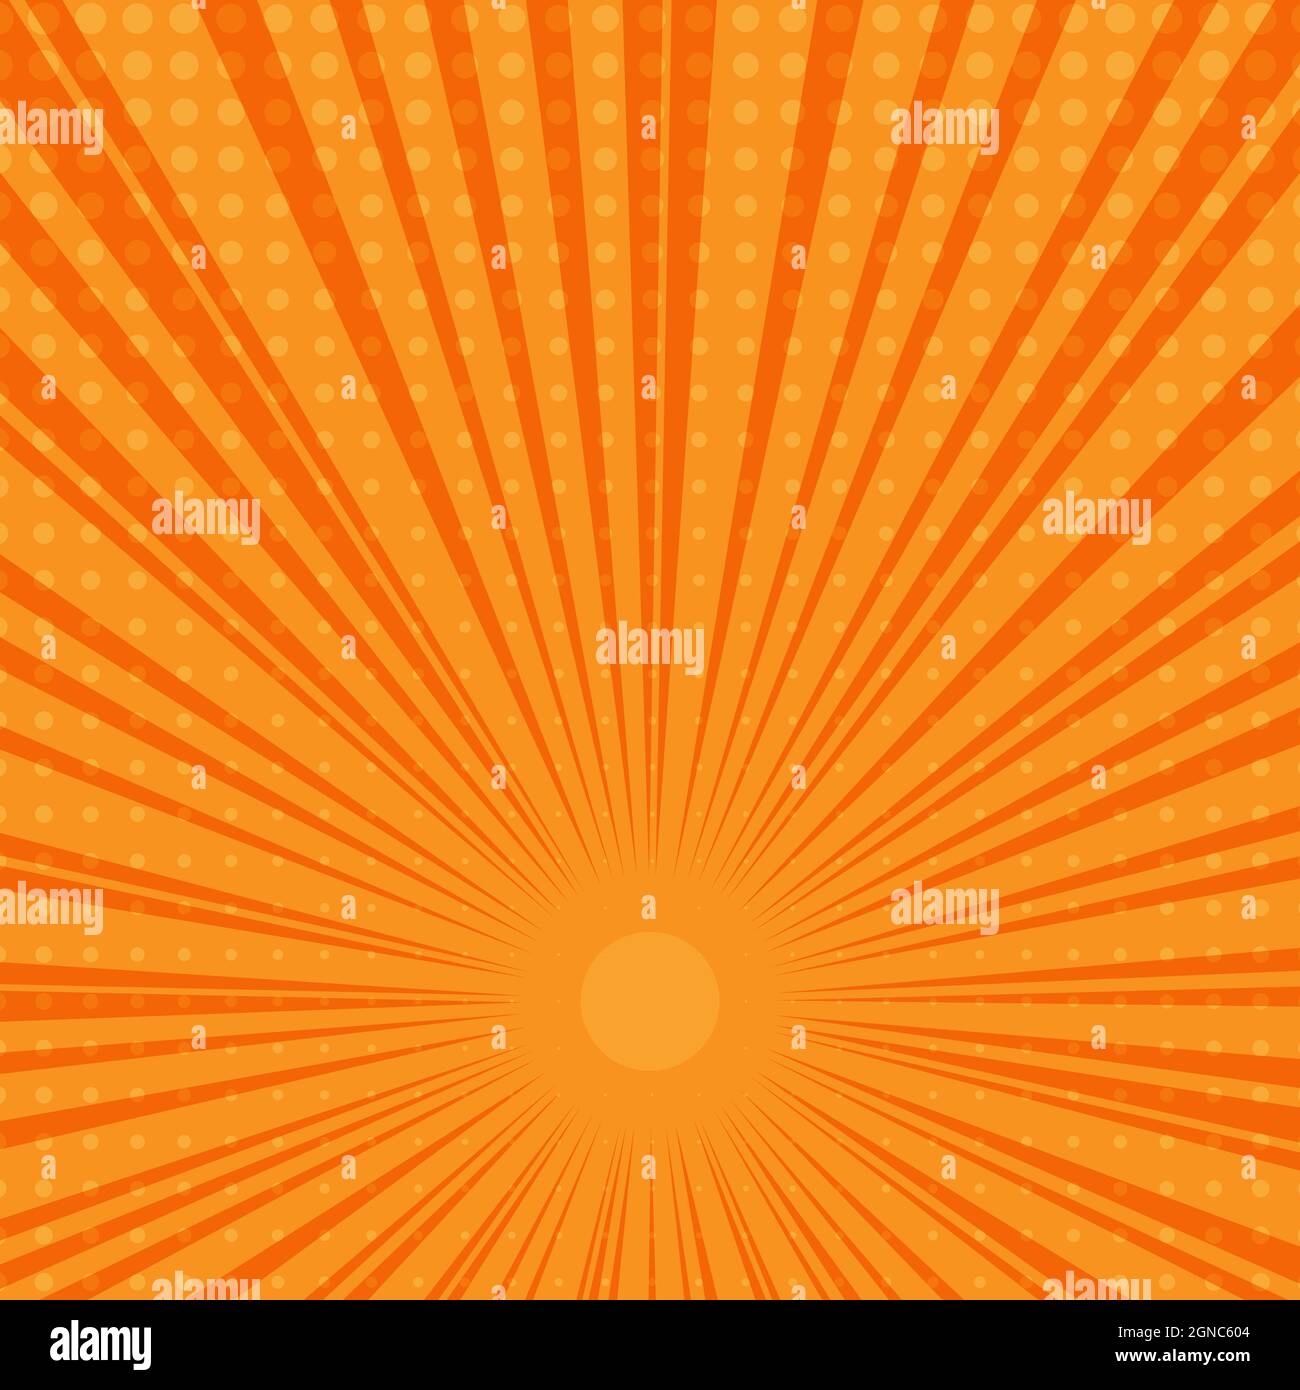 orange and yellow starburst background, vector illustration Stock Vector